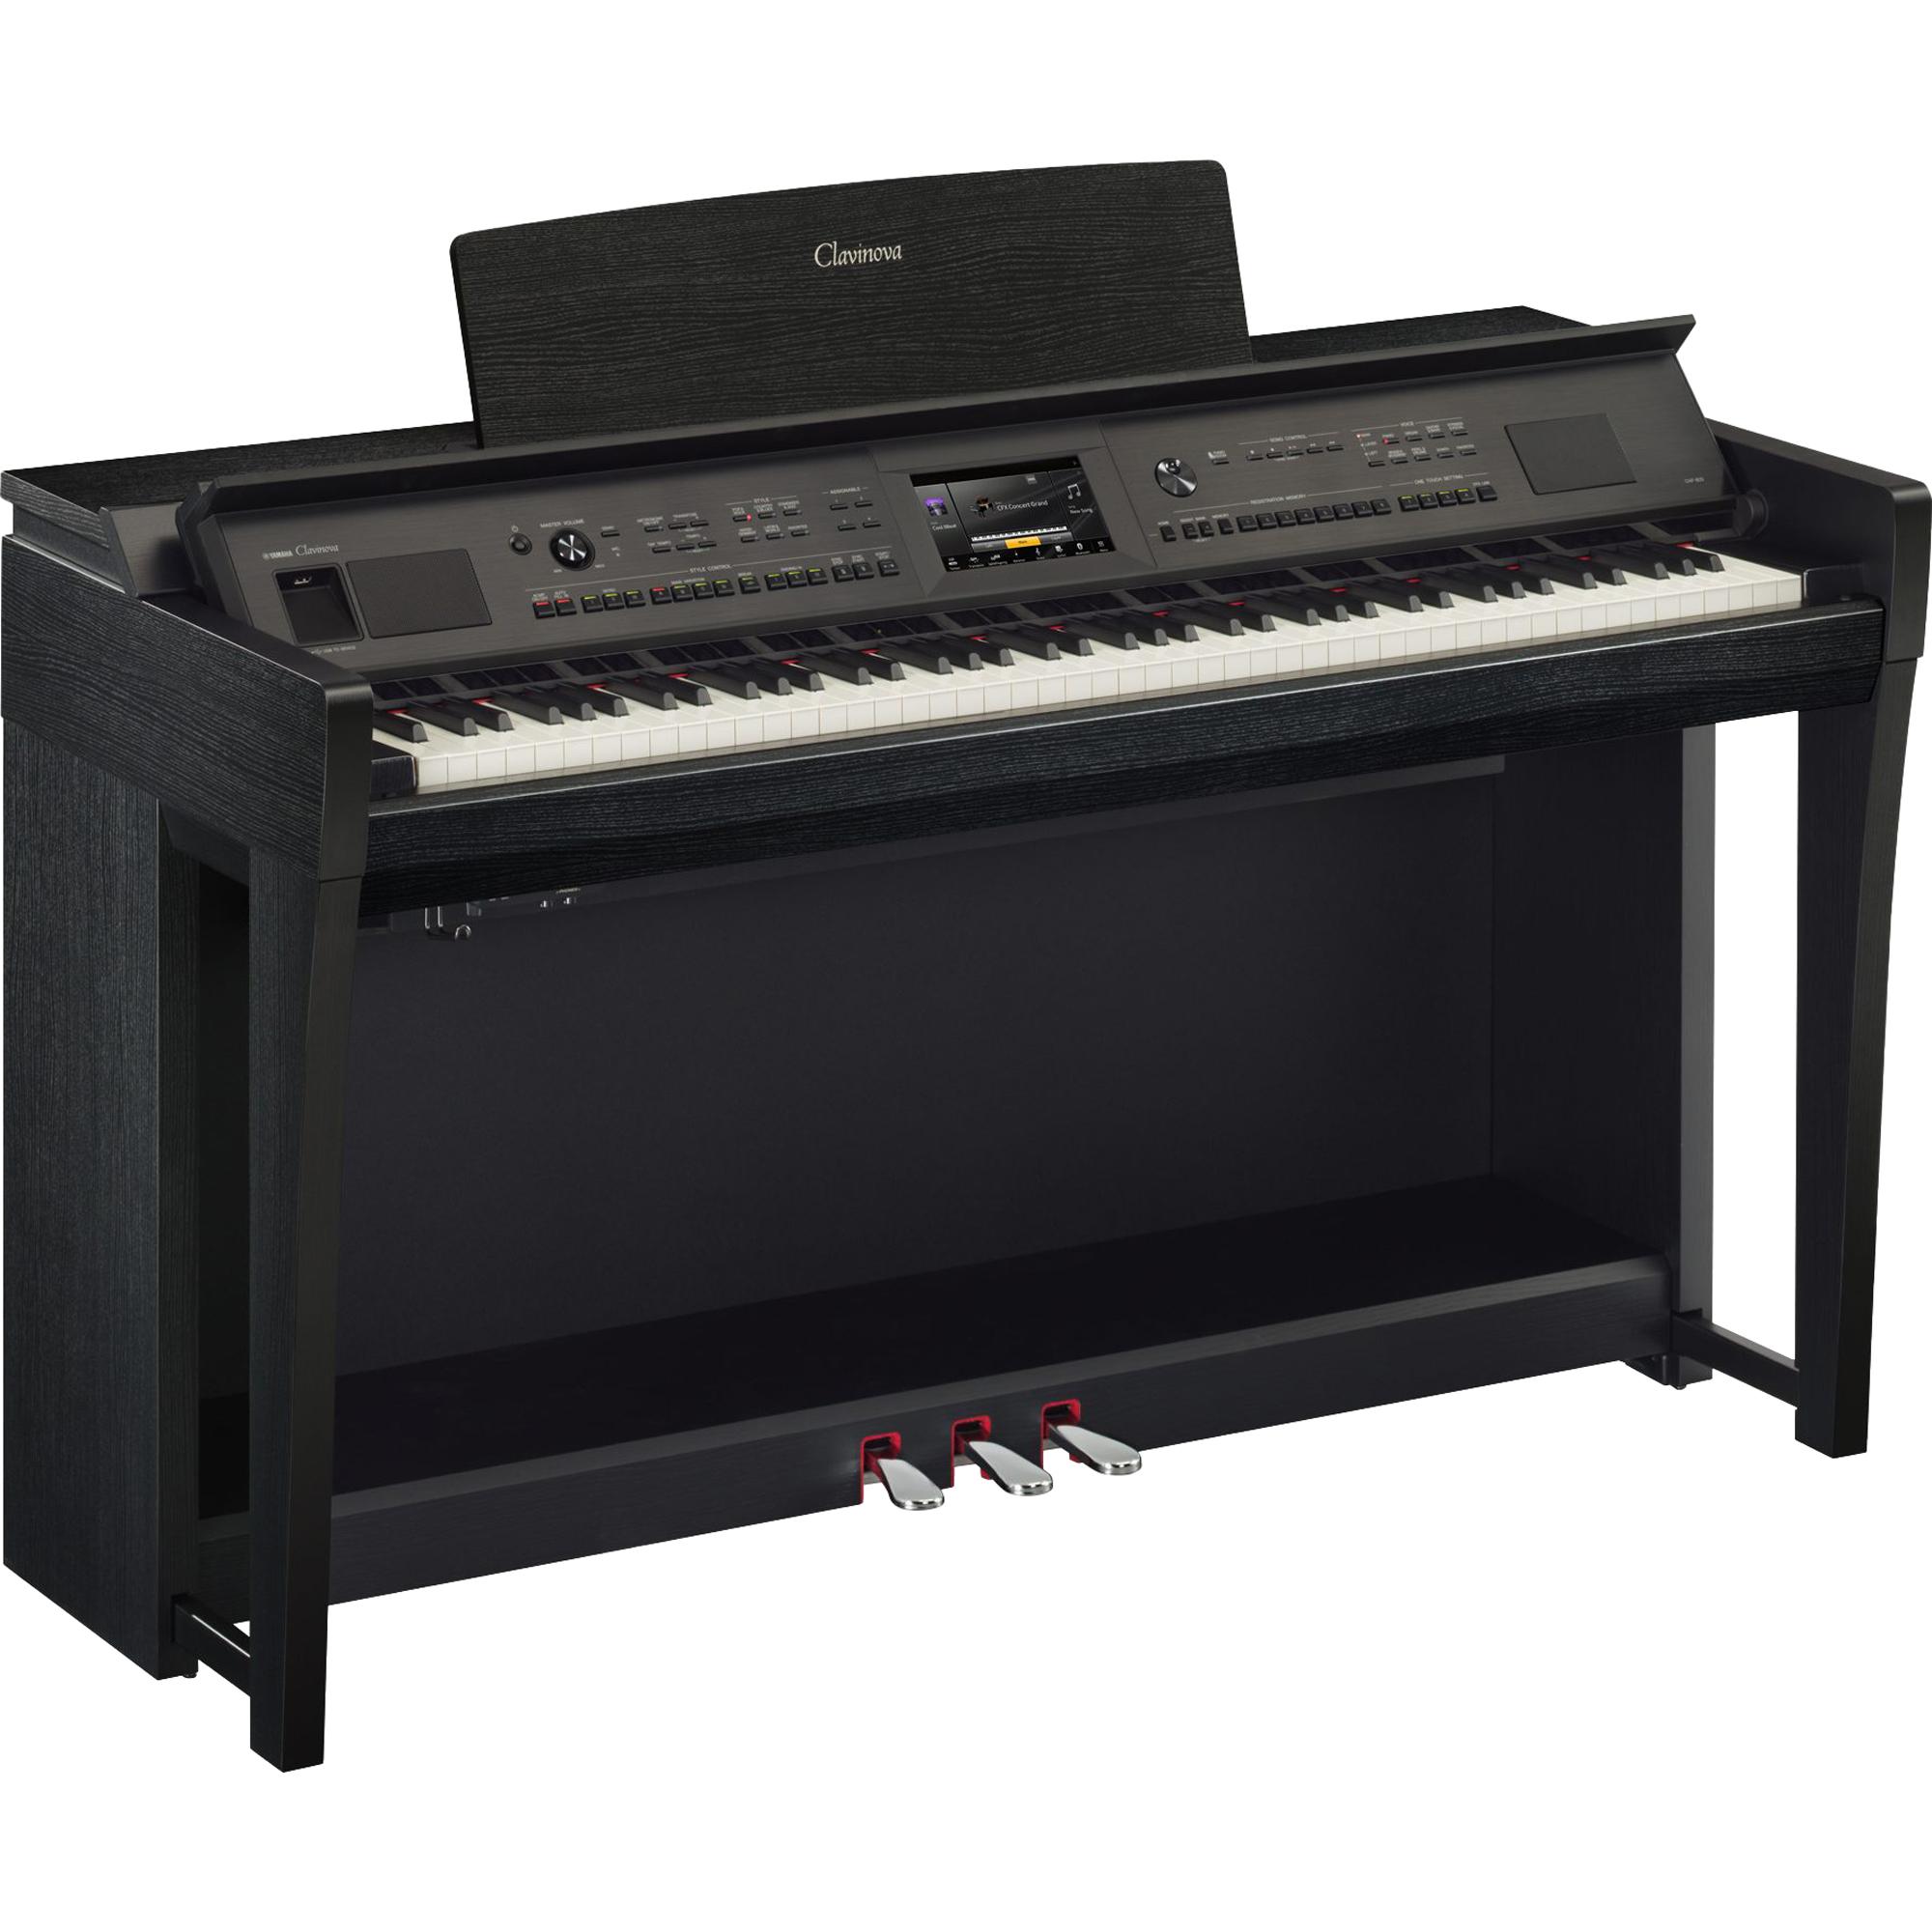 Piano Yamaha CVP805 Digital Preto